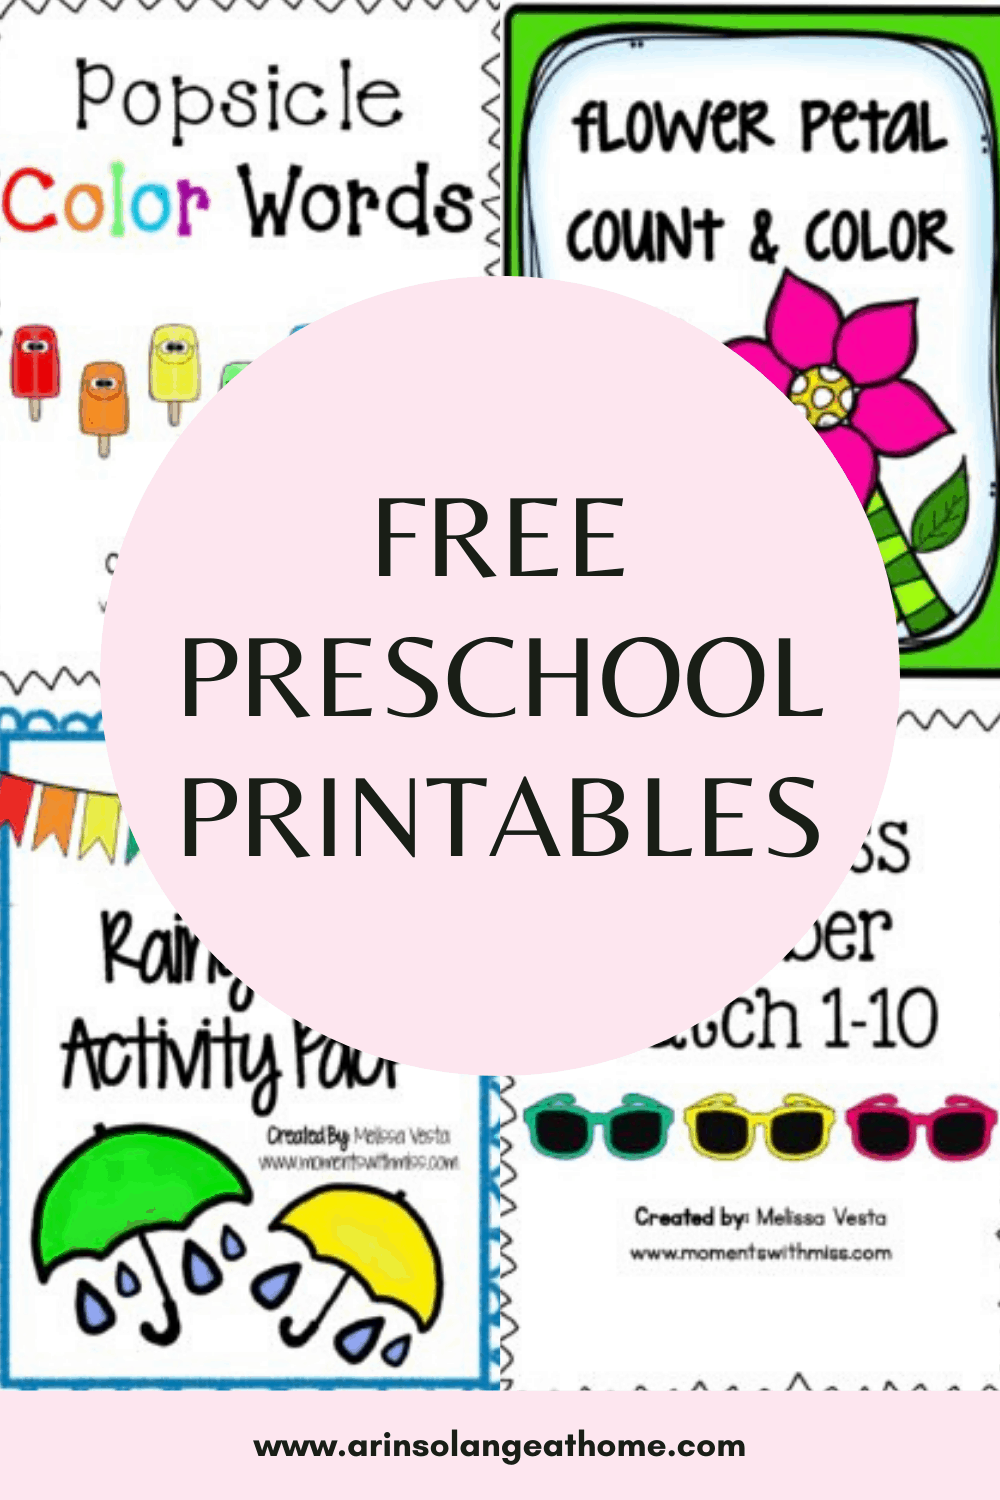 Free Preschool Printables